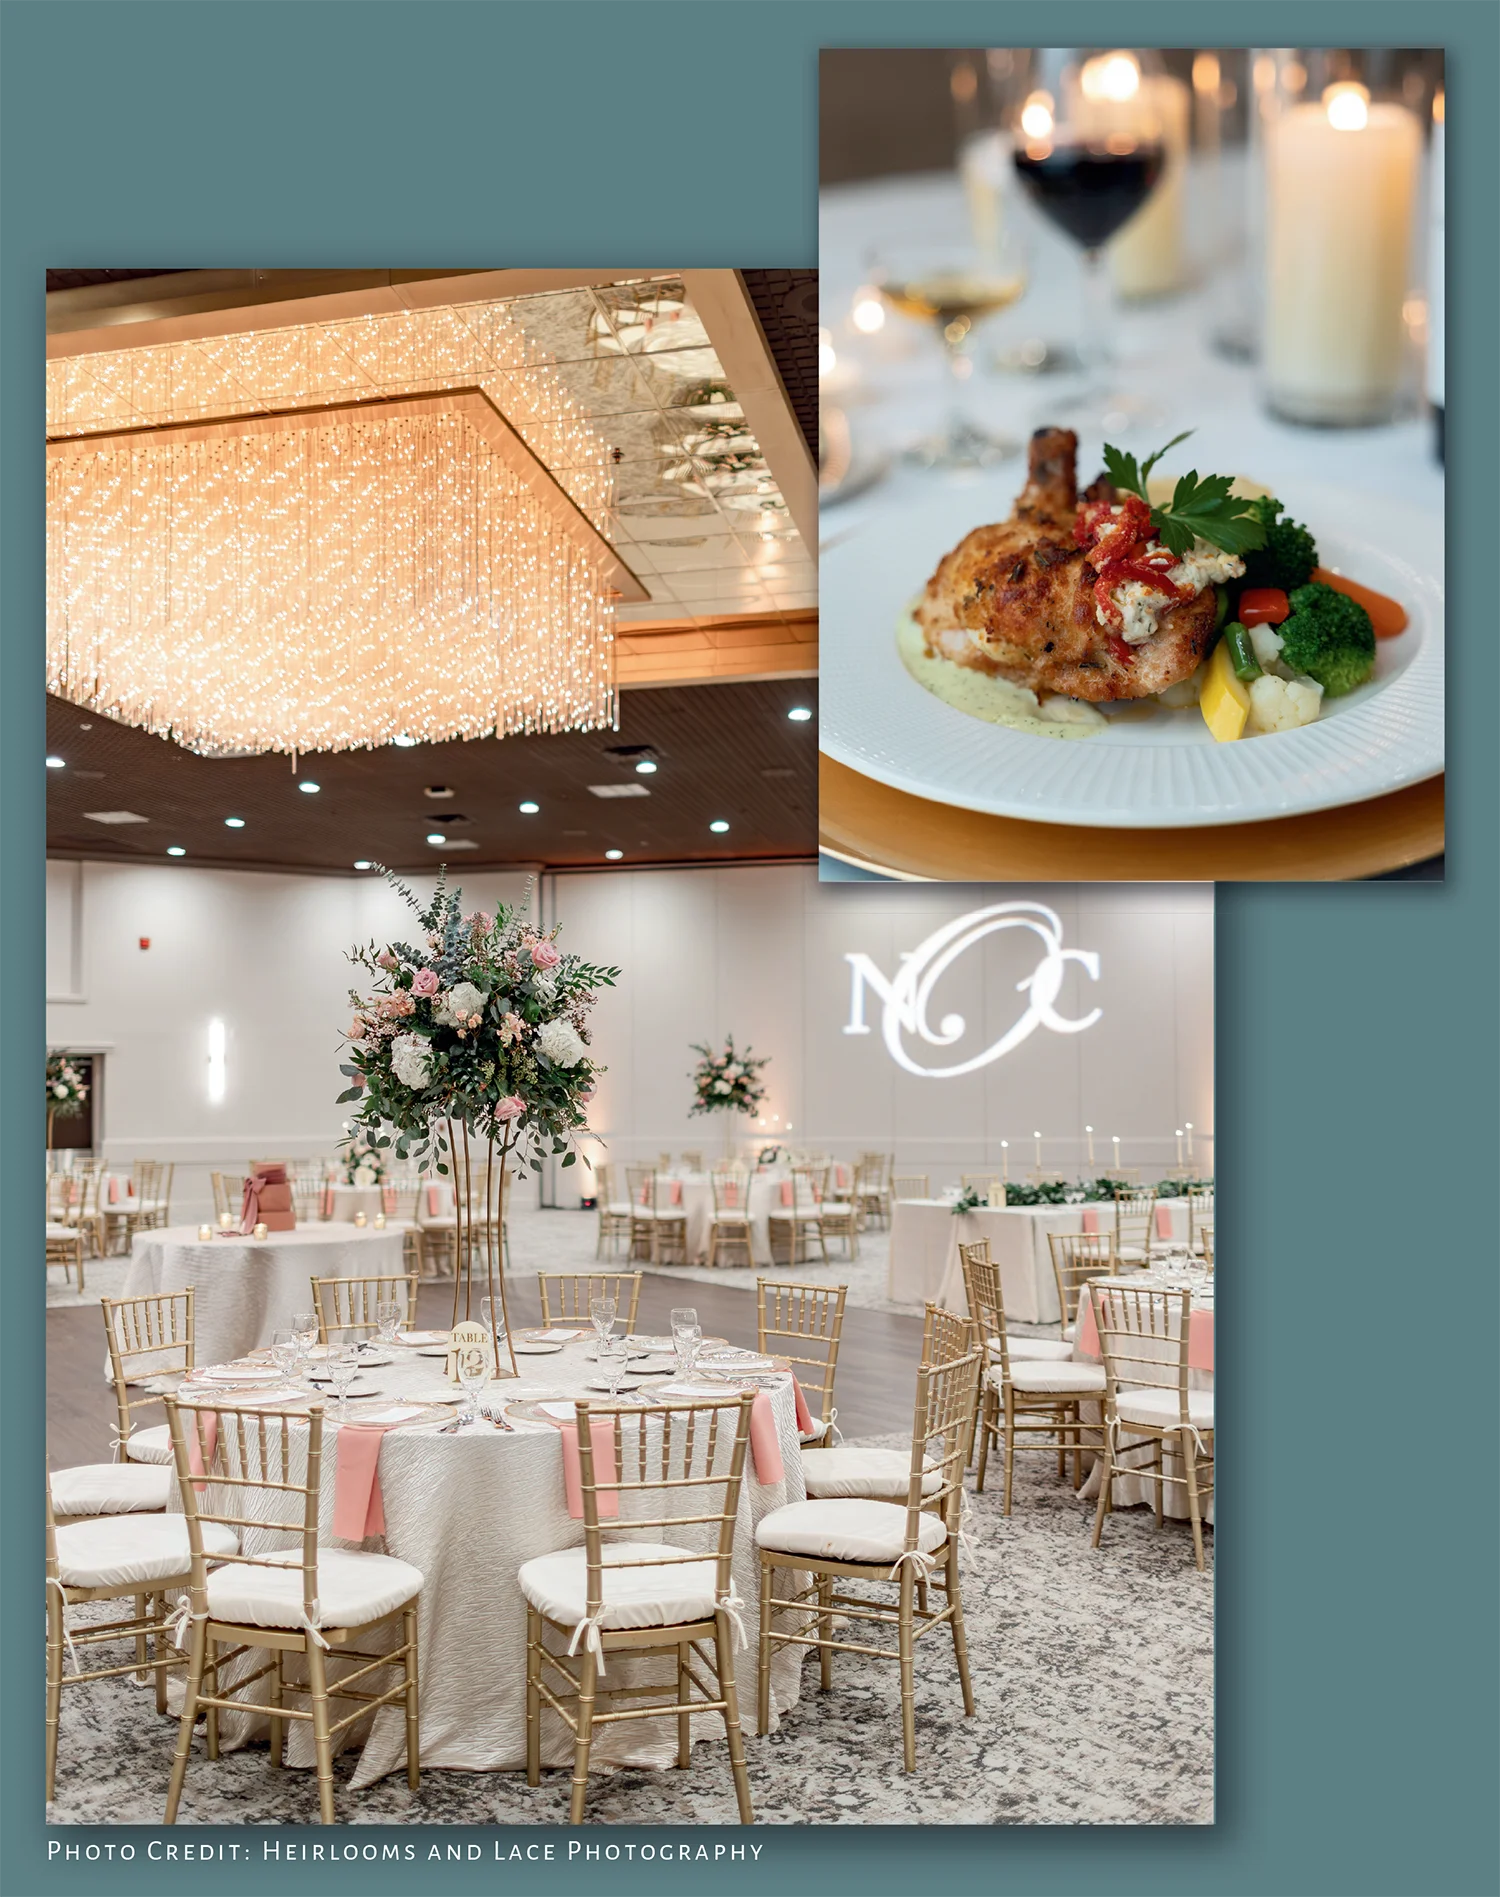 reception hall, lighting and plate of food